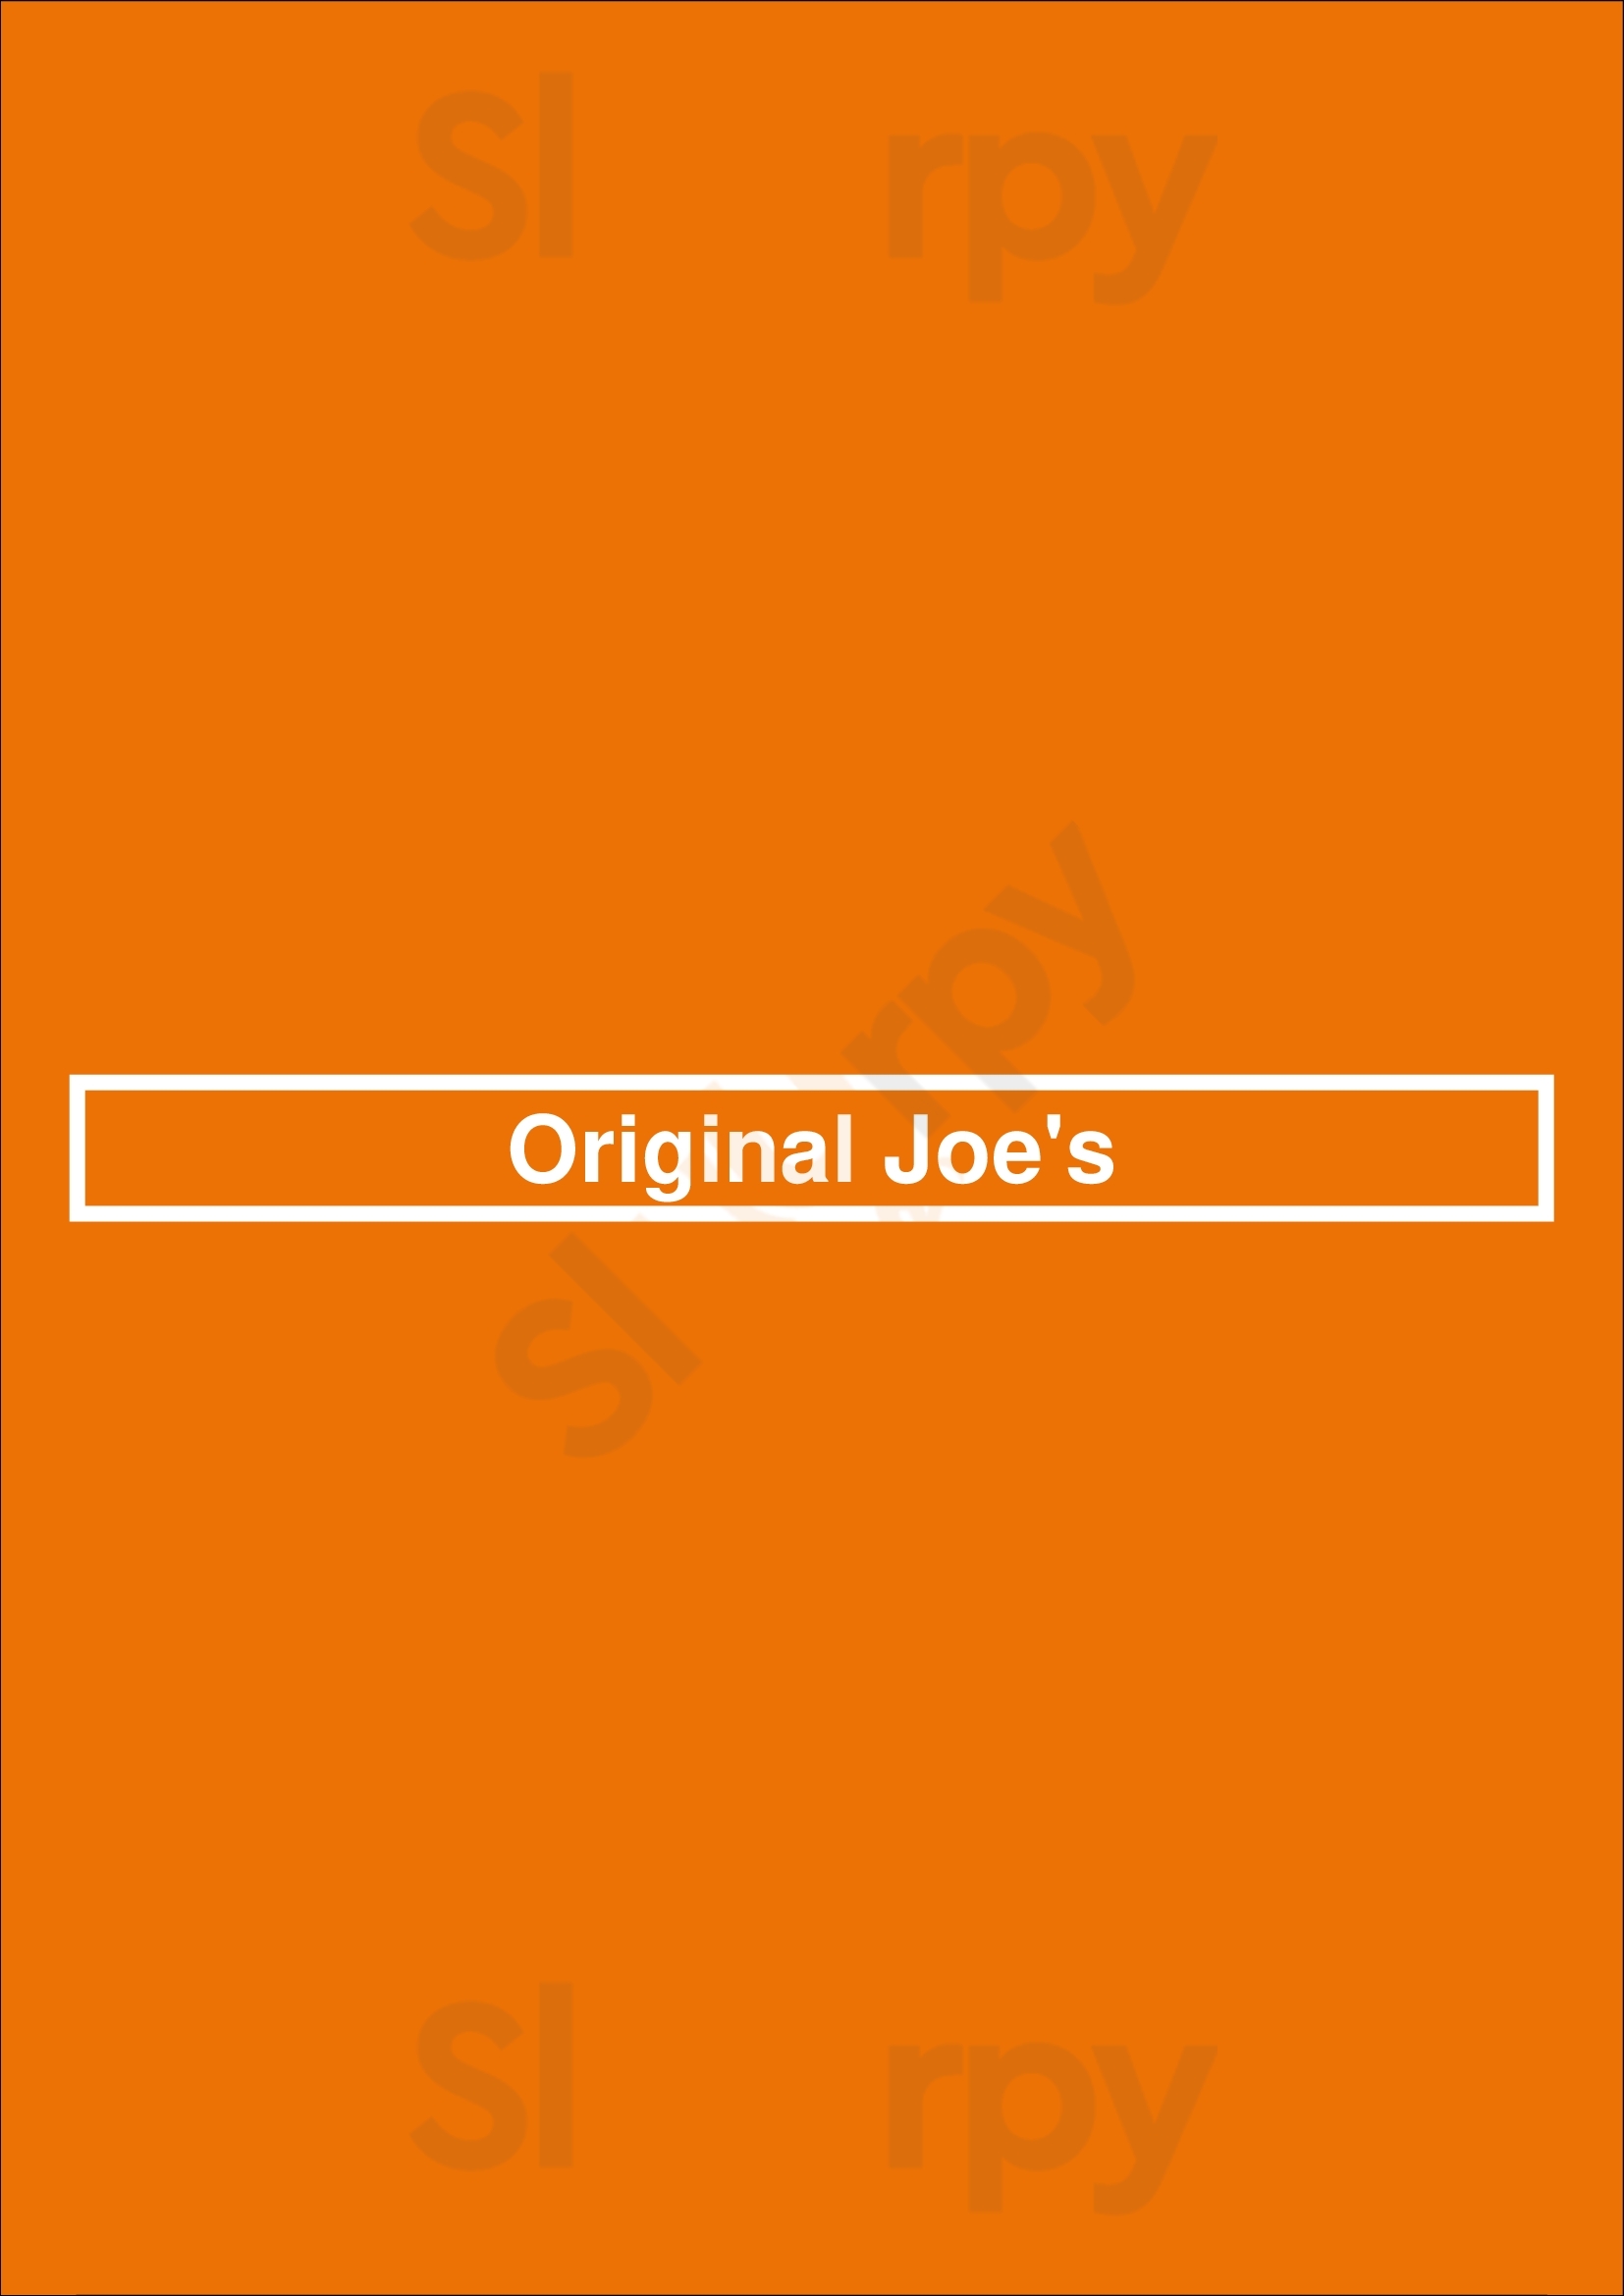 Original Joe's Vancouver Menu - 1